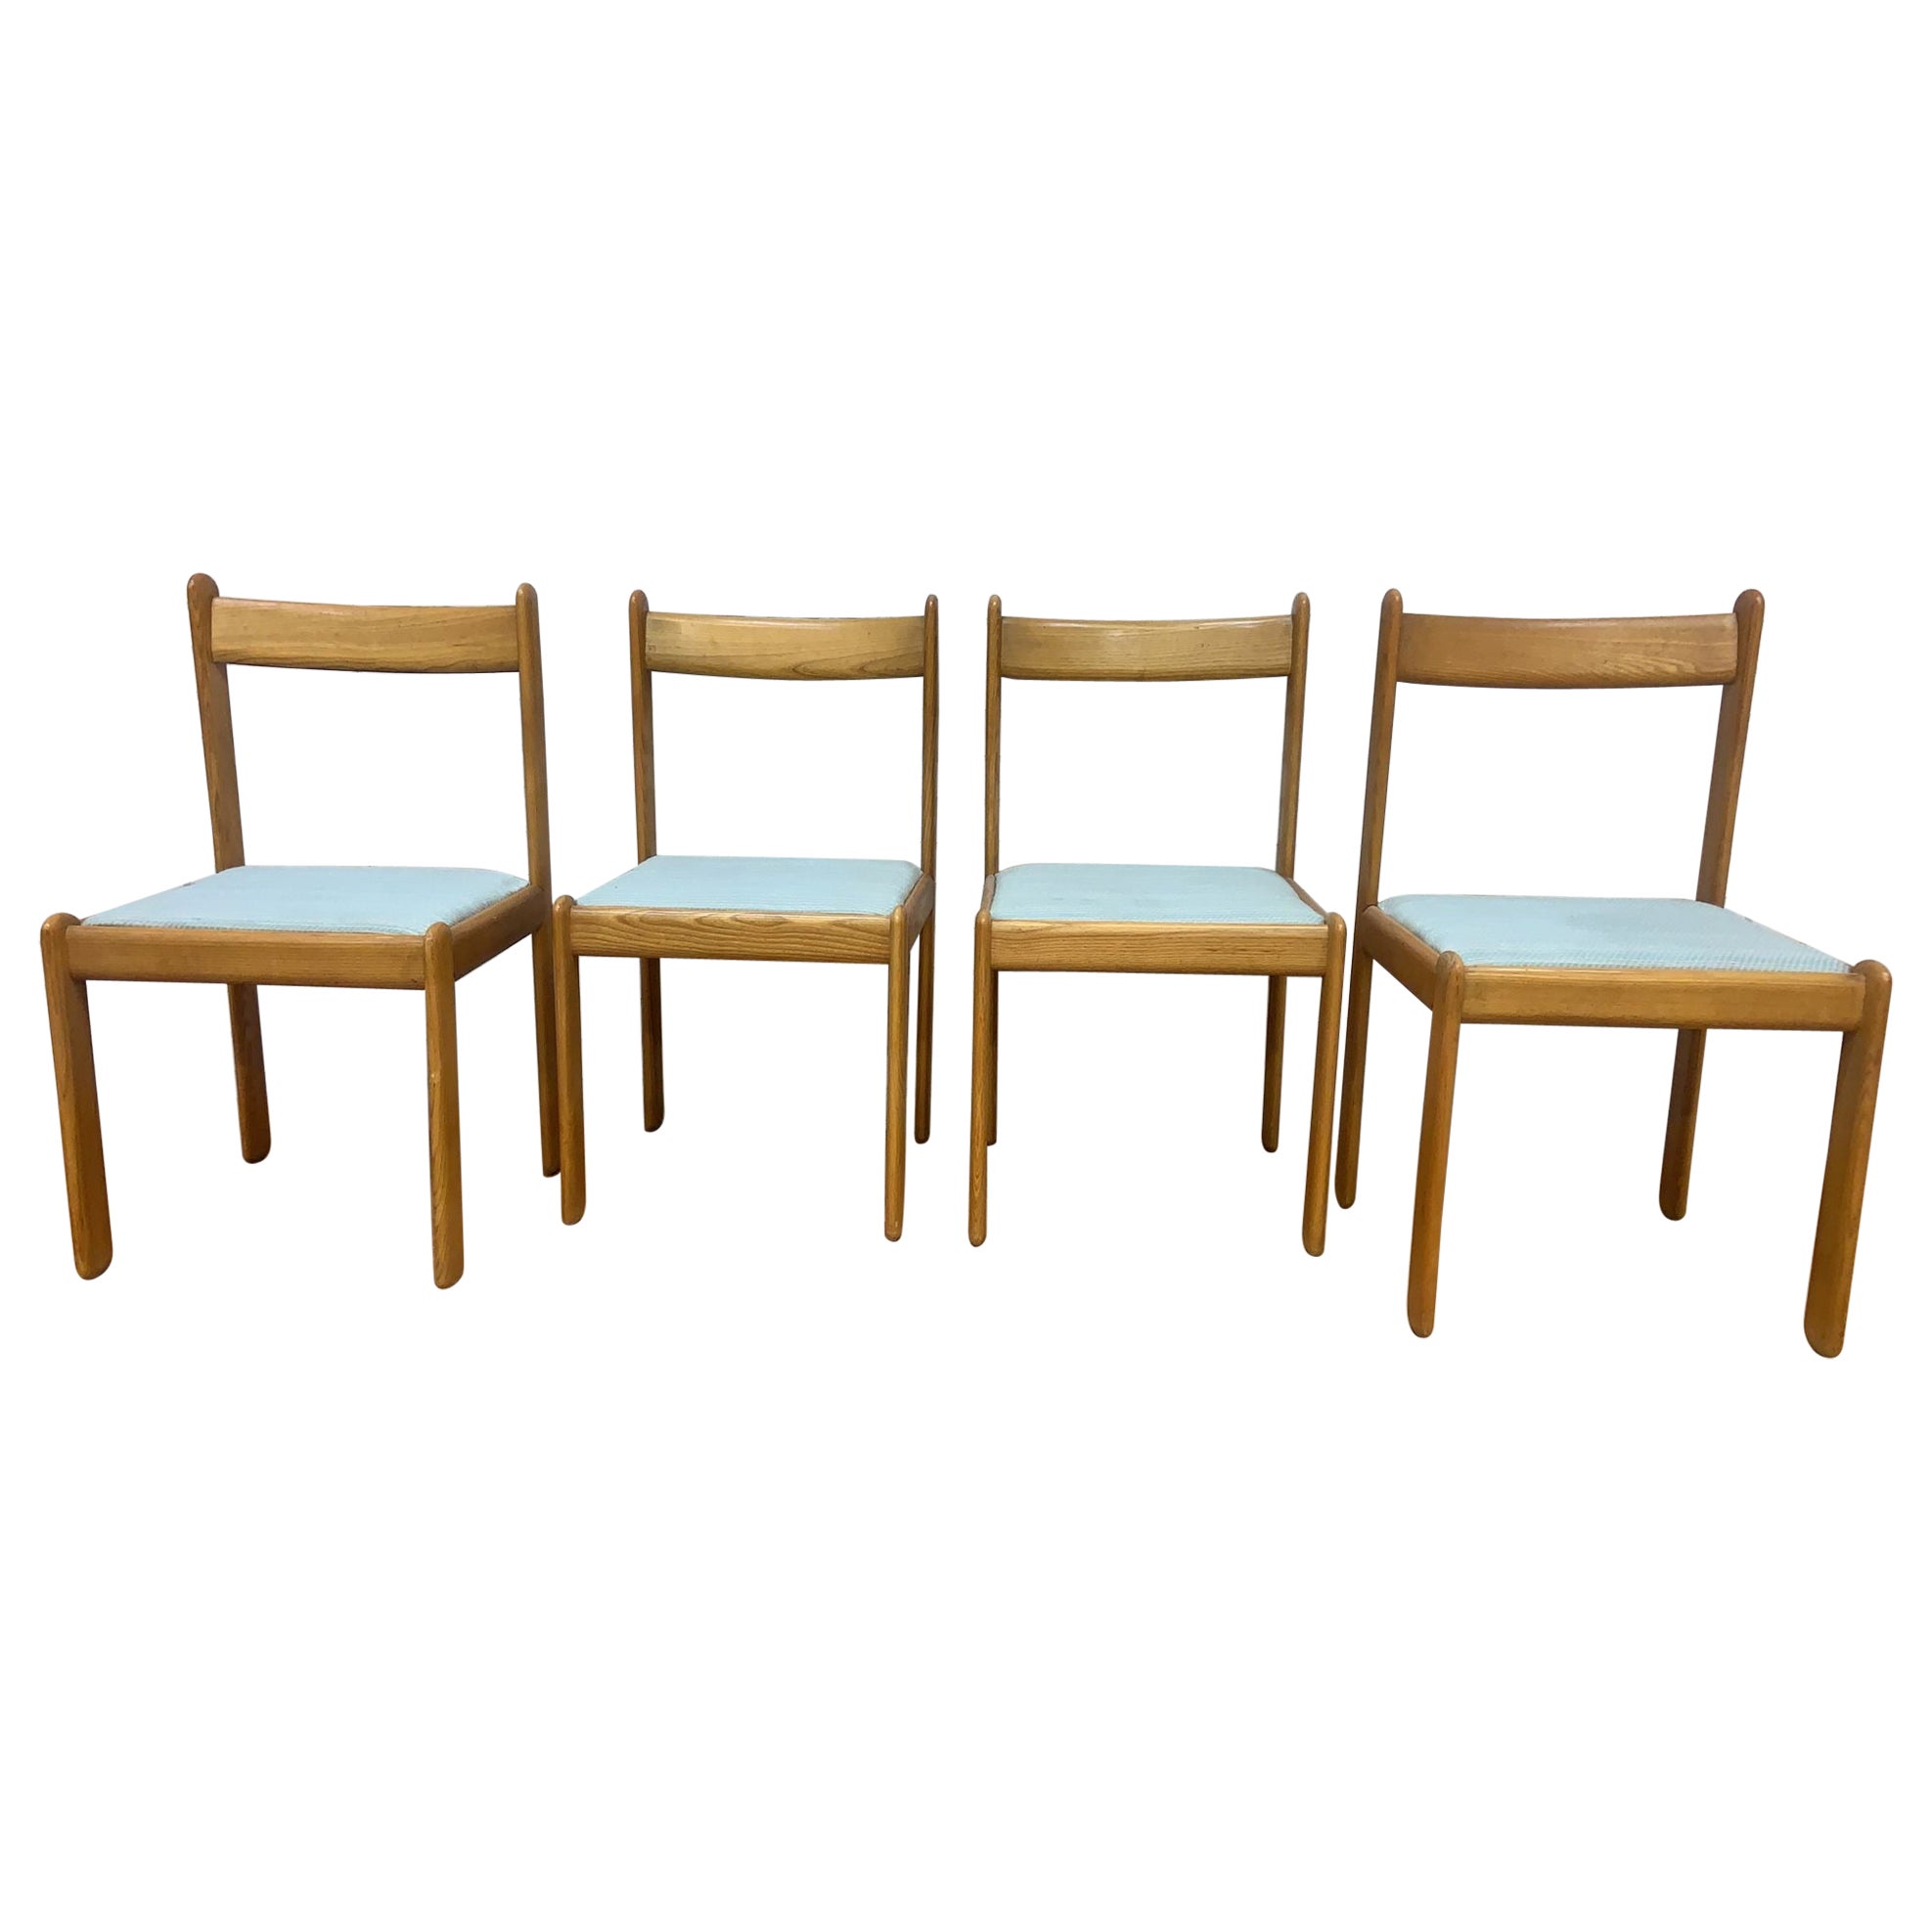 Vintage Italian Modern Vico Magistretti Style Blonde Beech Wood Chairs -Set of 4